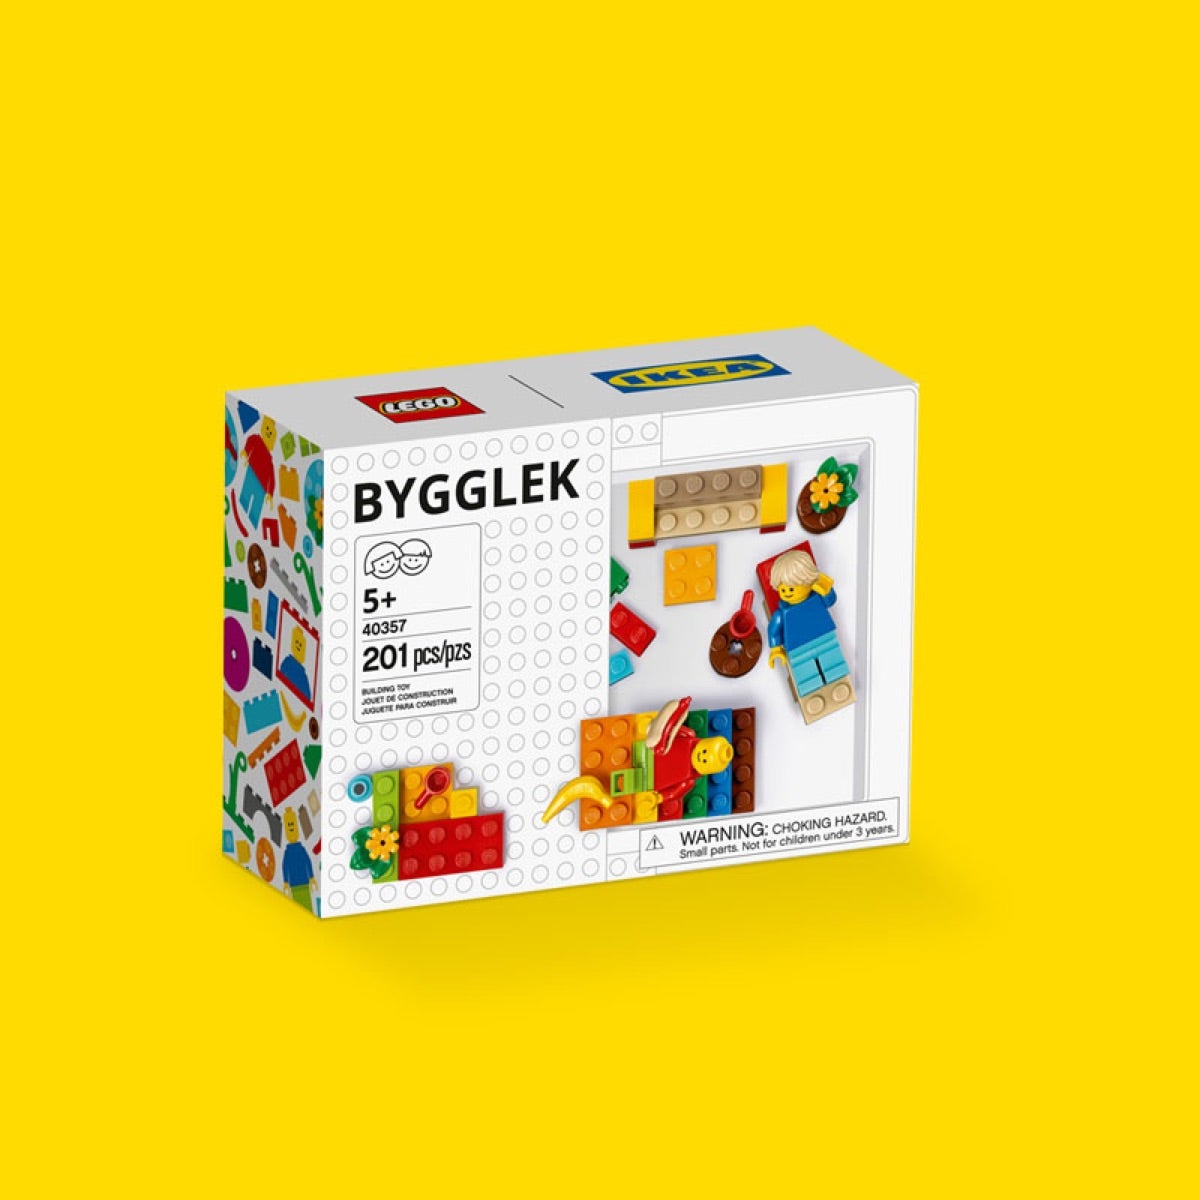 Bygglek lego Box Mit coperchio35x26x12 CM